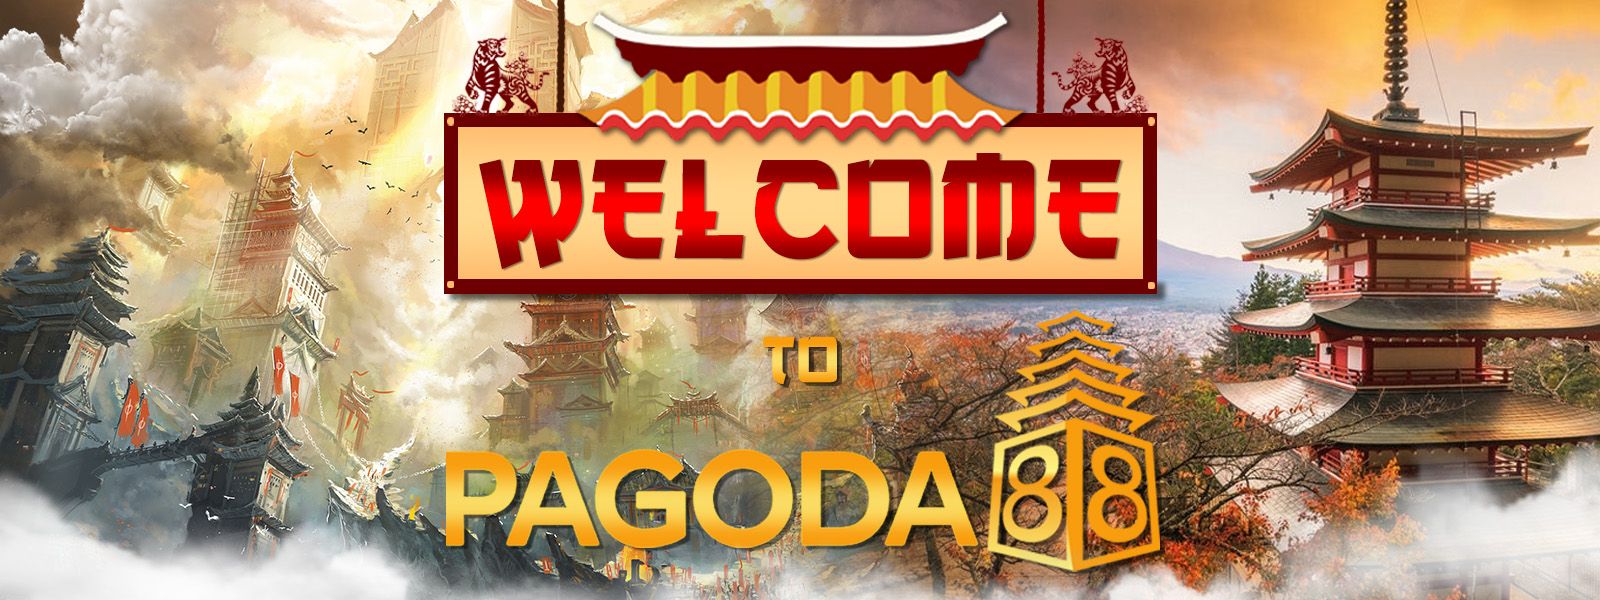 Welcome To Pagoda88